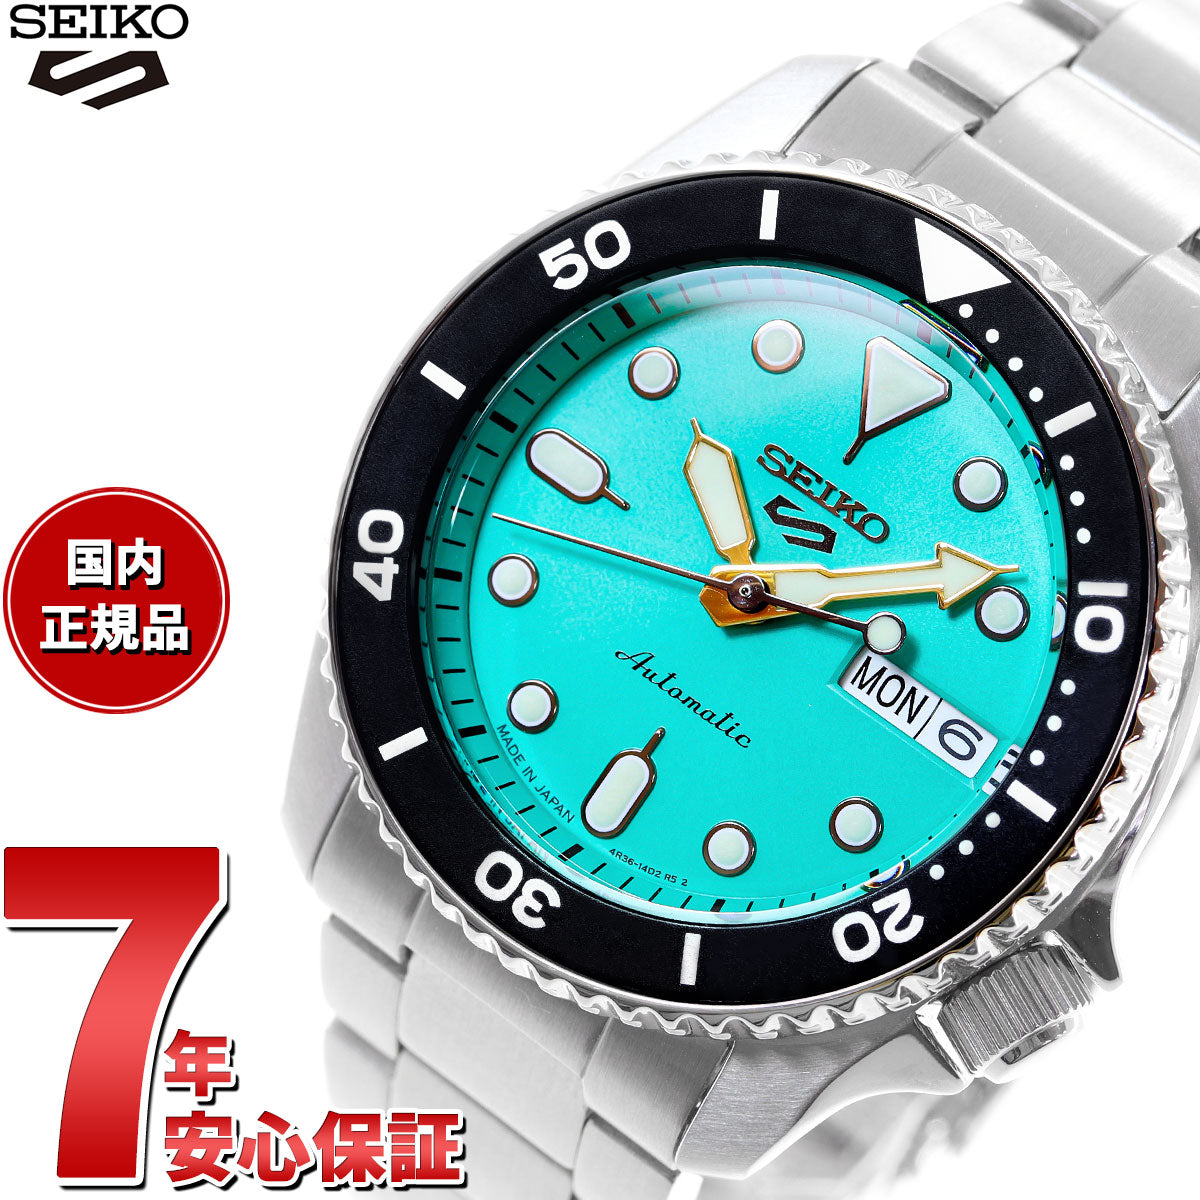 Seiko 5 Sports 腕時計 ユニセックス SBSA229 スポーツ 自動巻き エメラルドグリーンxシルバー アナログ表示